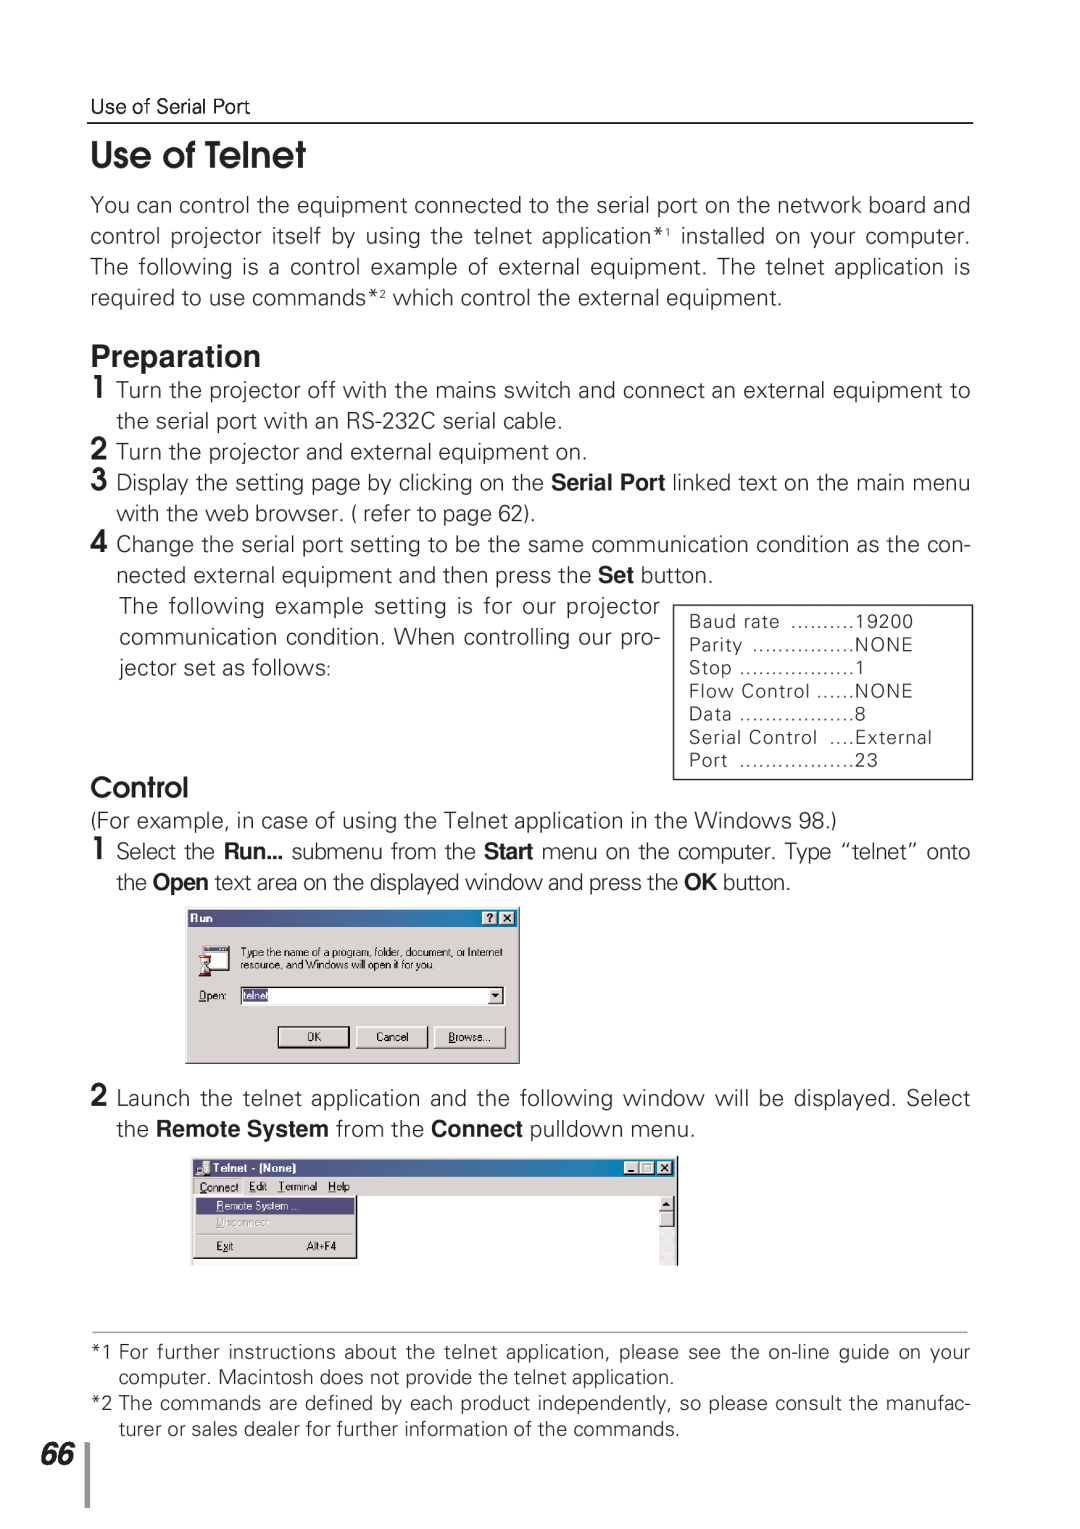 Eiki MD13NET owner manual Use of Telnet, Preparation, Control 